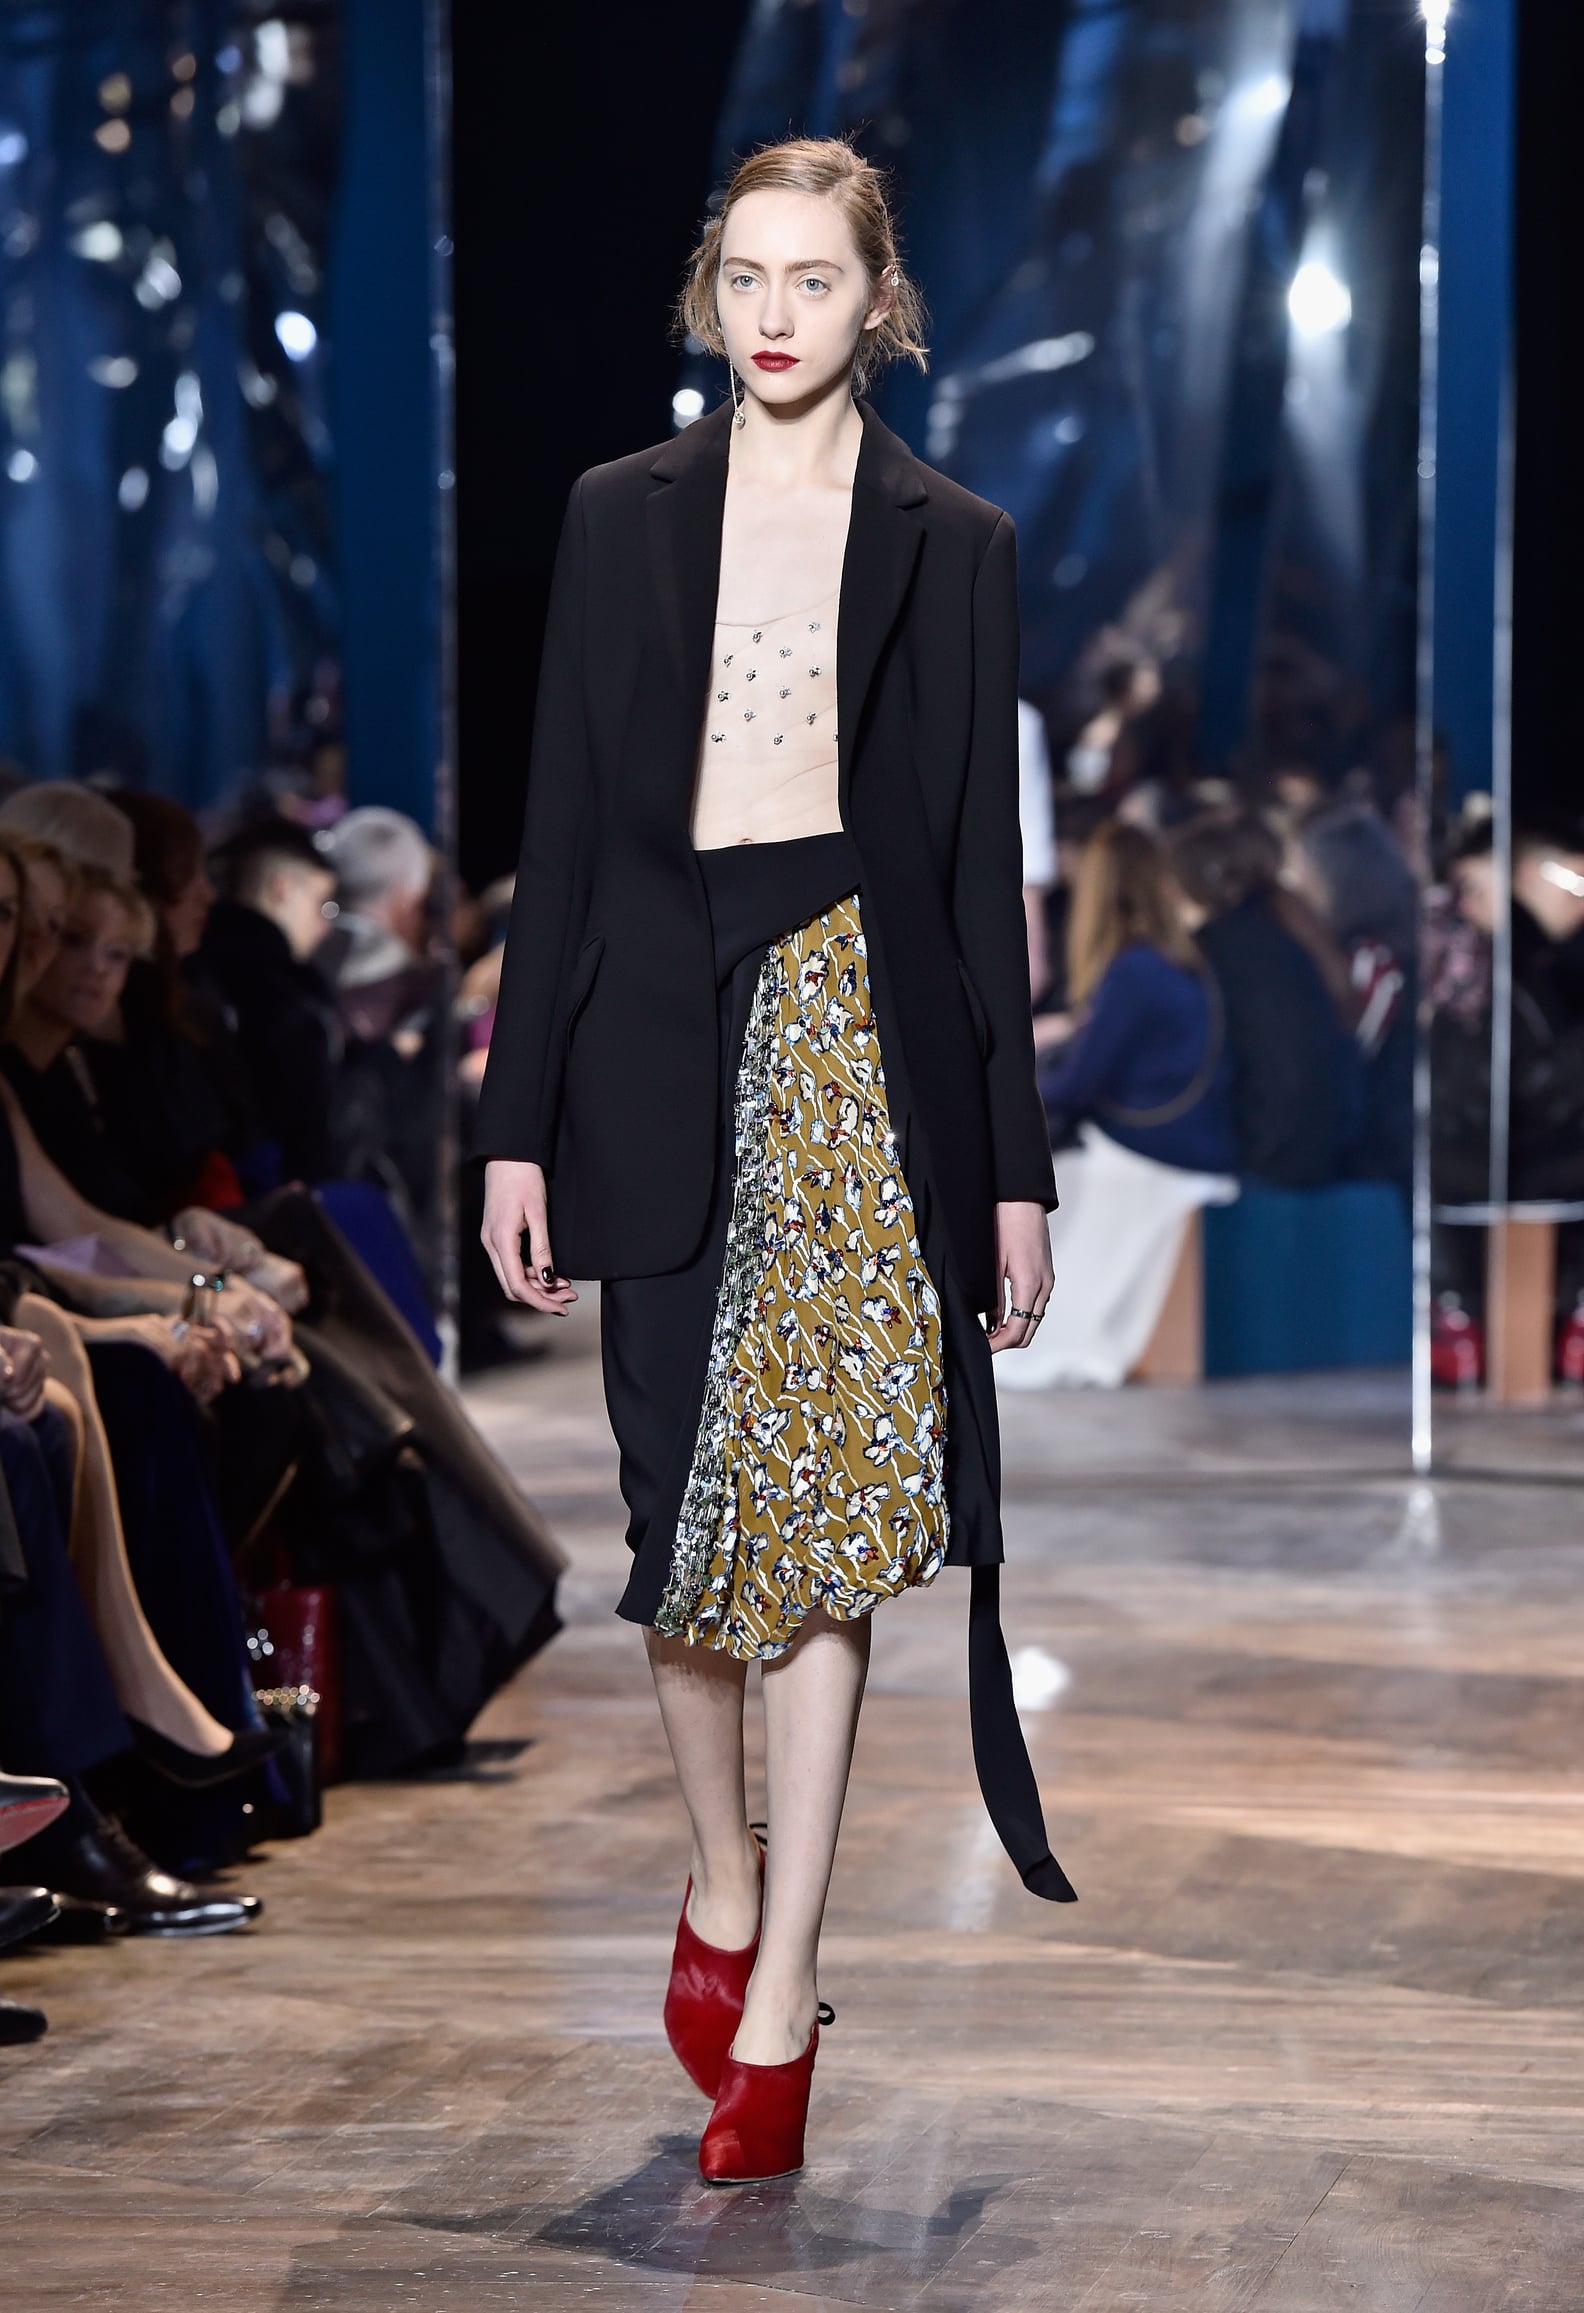 Dior Couture Spring 2016 Collection | POPSUGAR Fashion